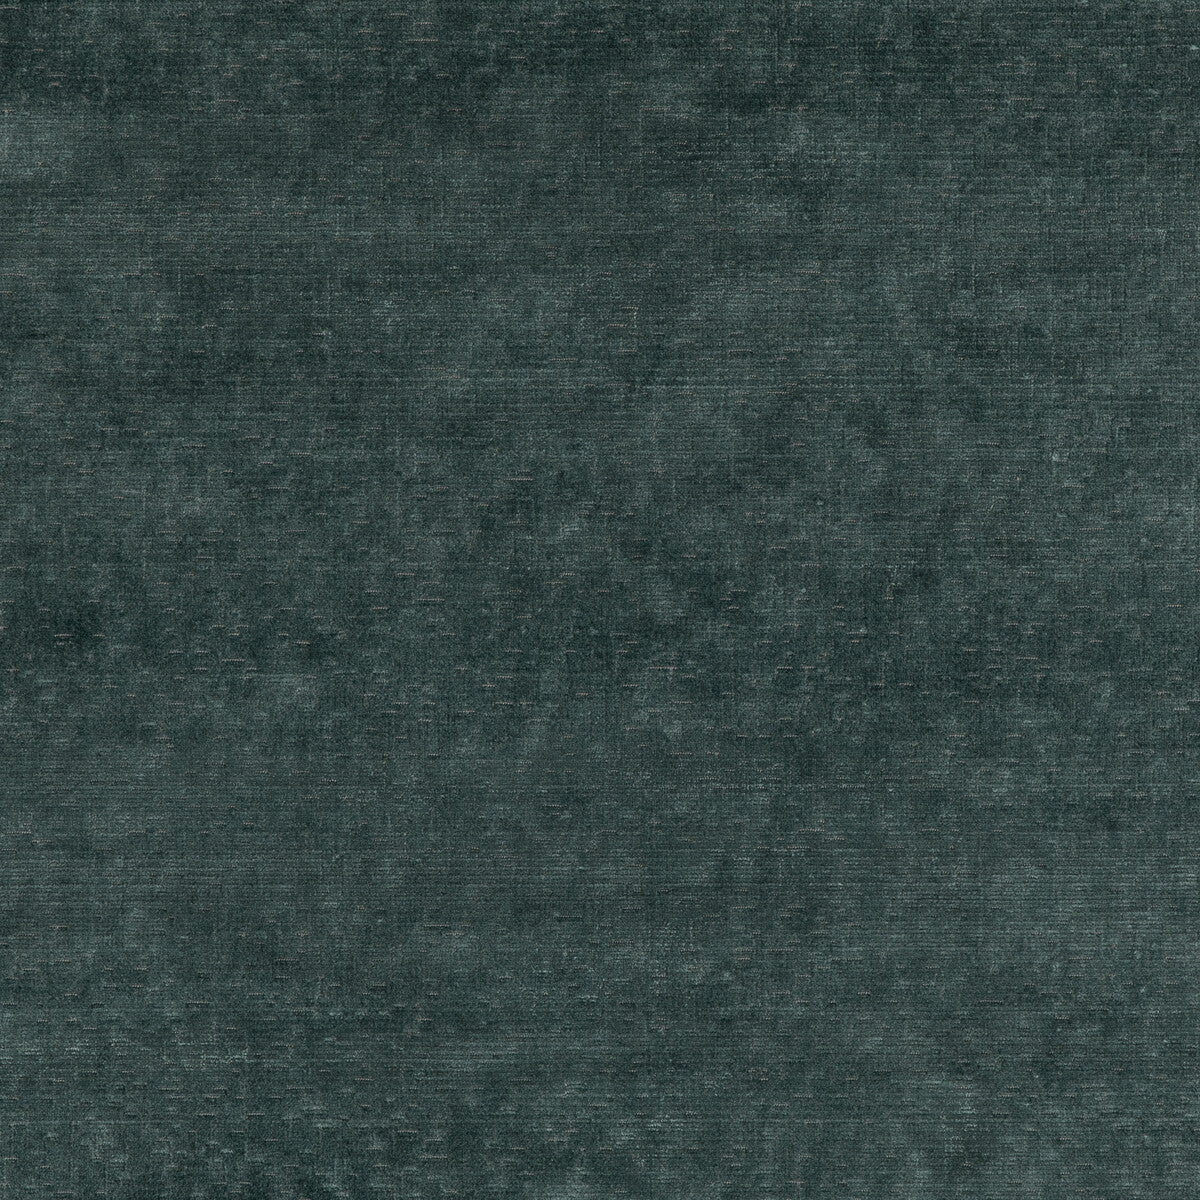 Alma Velvet fabric in teal color - pattern BF10827.615.0 - by G P &amp; J Baker in the Coromandel Velvets collection